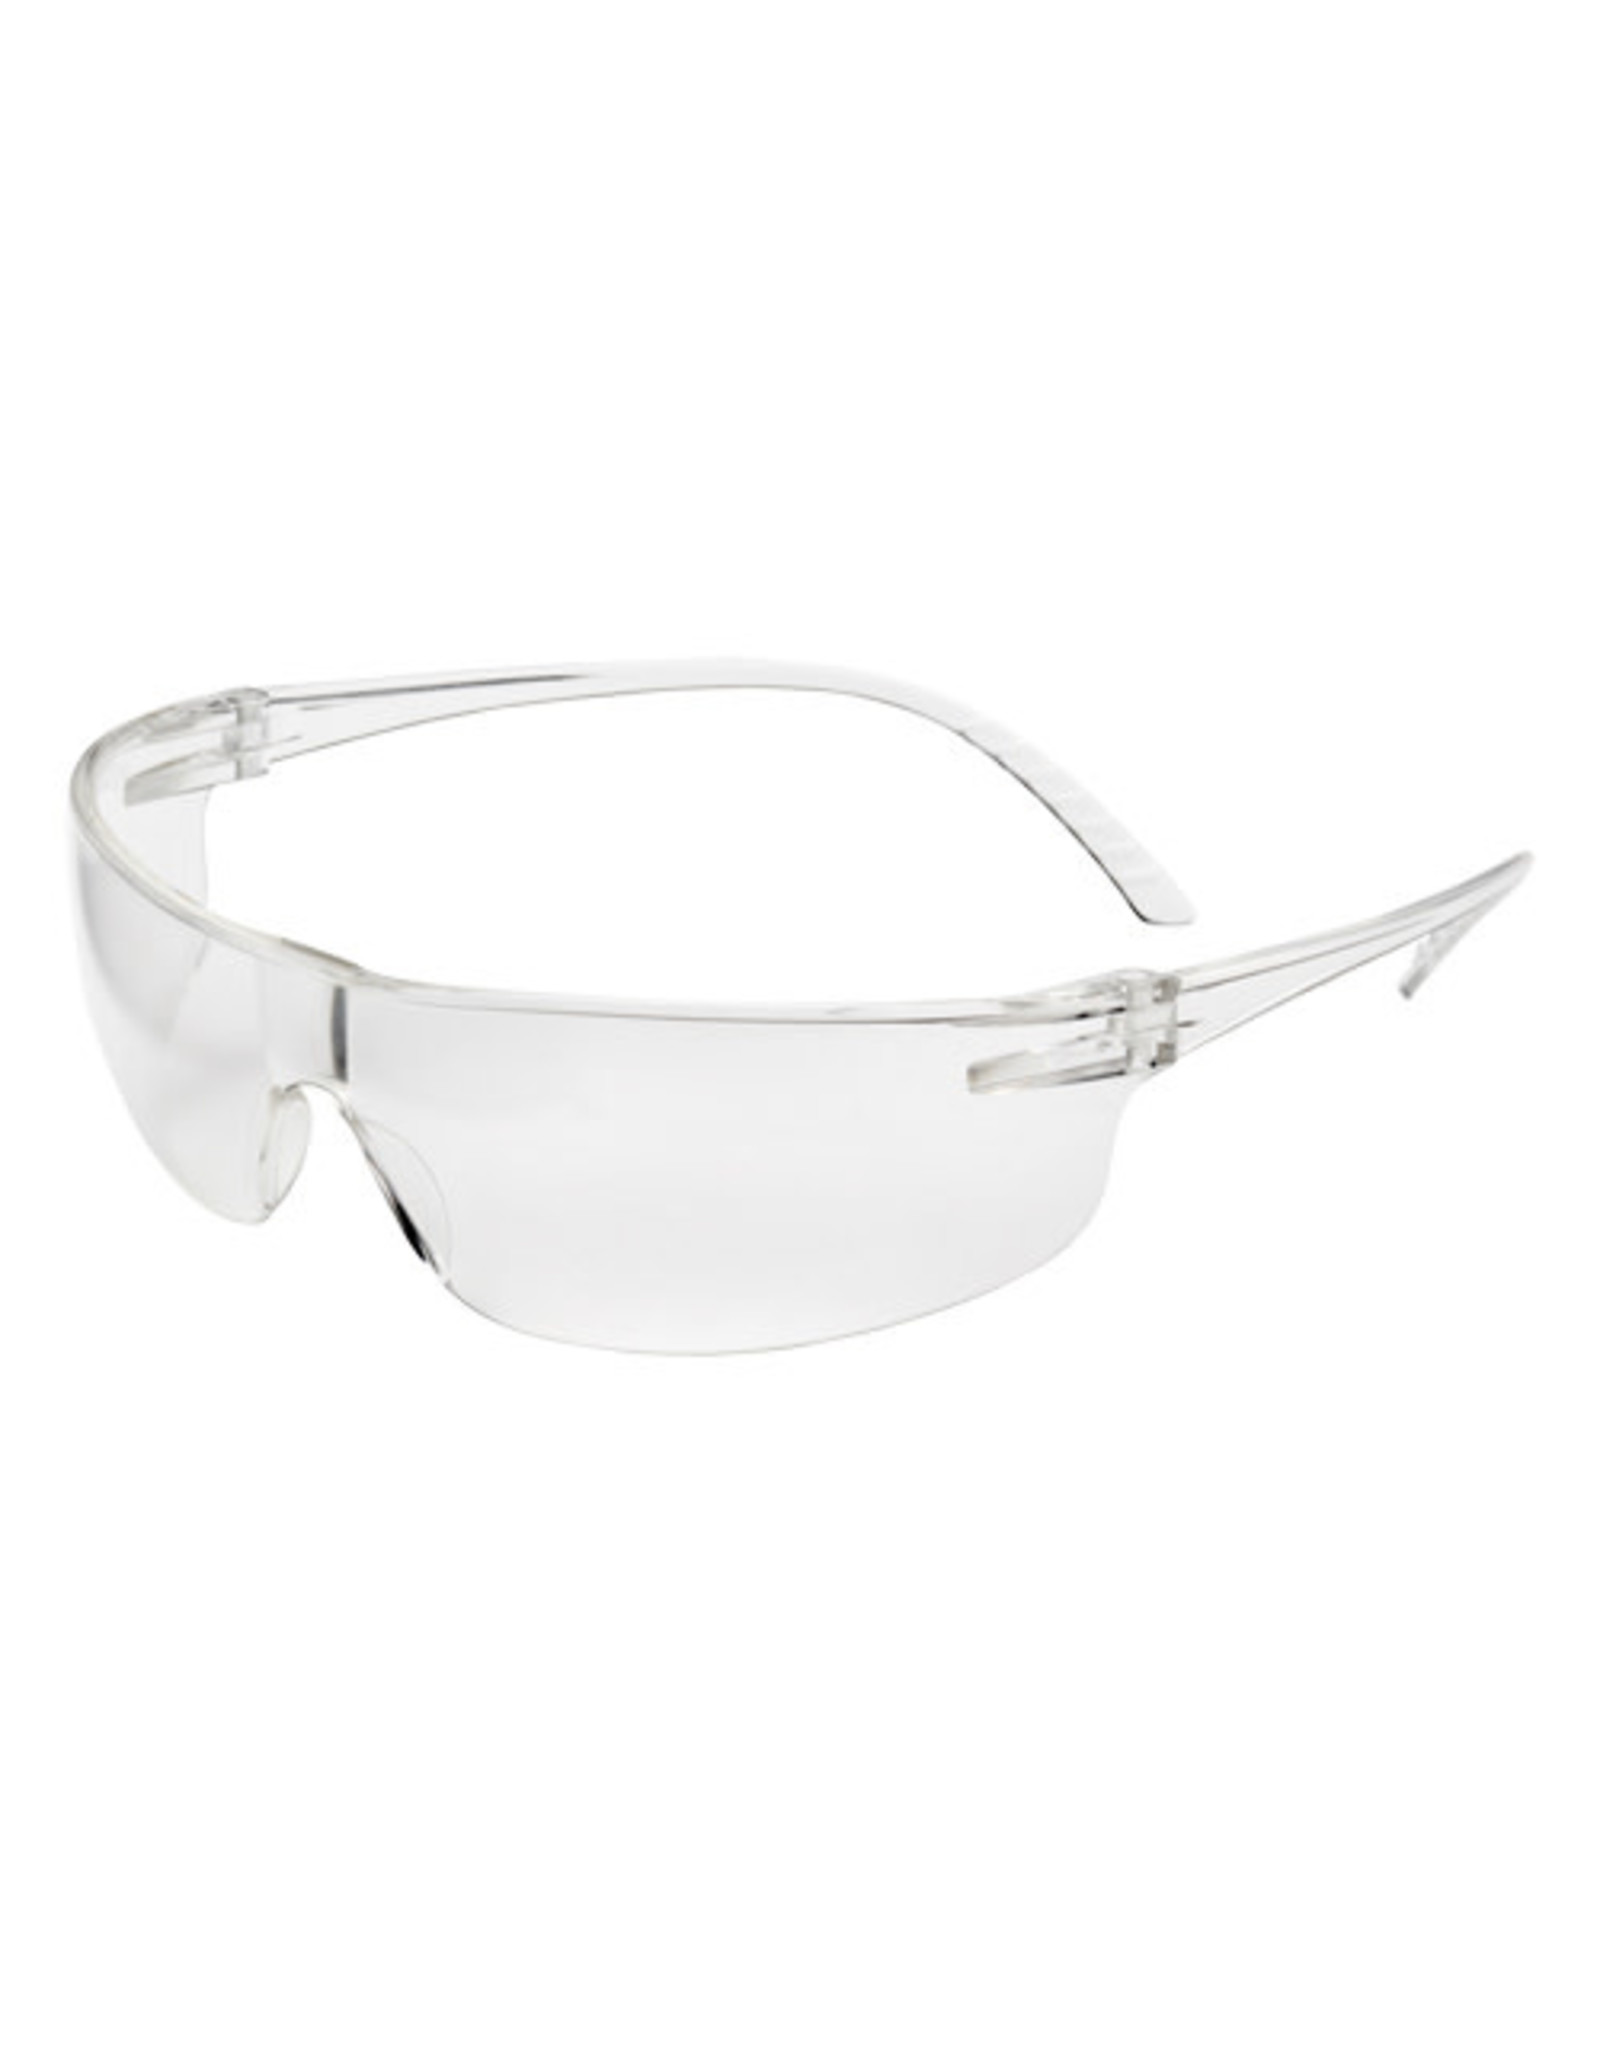 Uvex Honeywell/UVEX Safety Glasses, Clear/Anti-Fog/Scratch